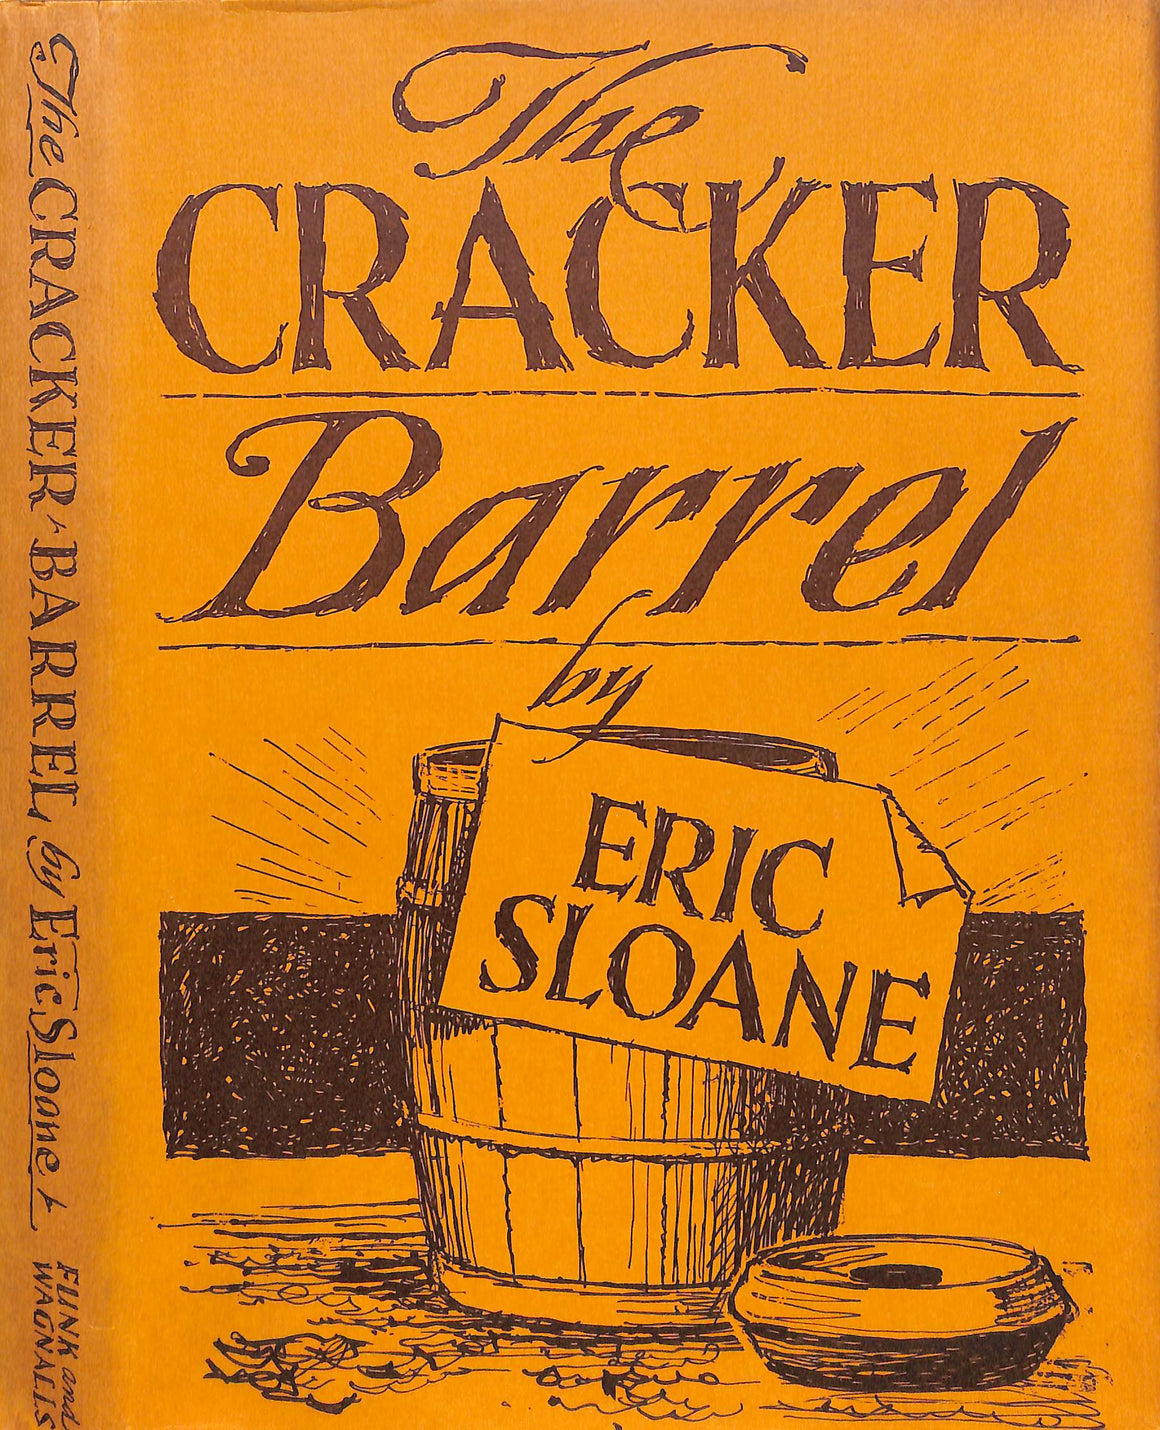 "The Cracker Barrel" 1967 SLOANE, Eric